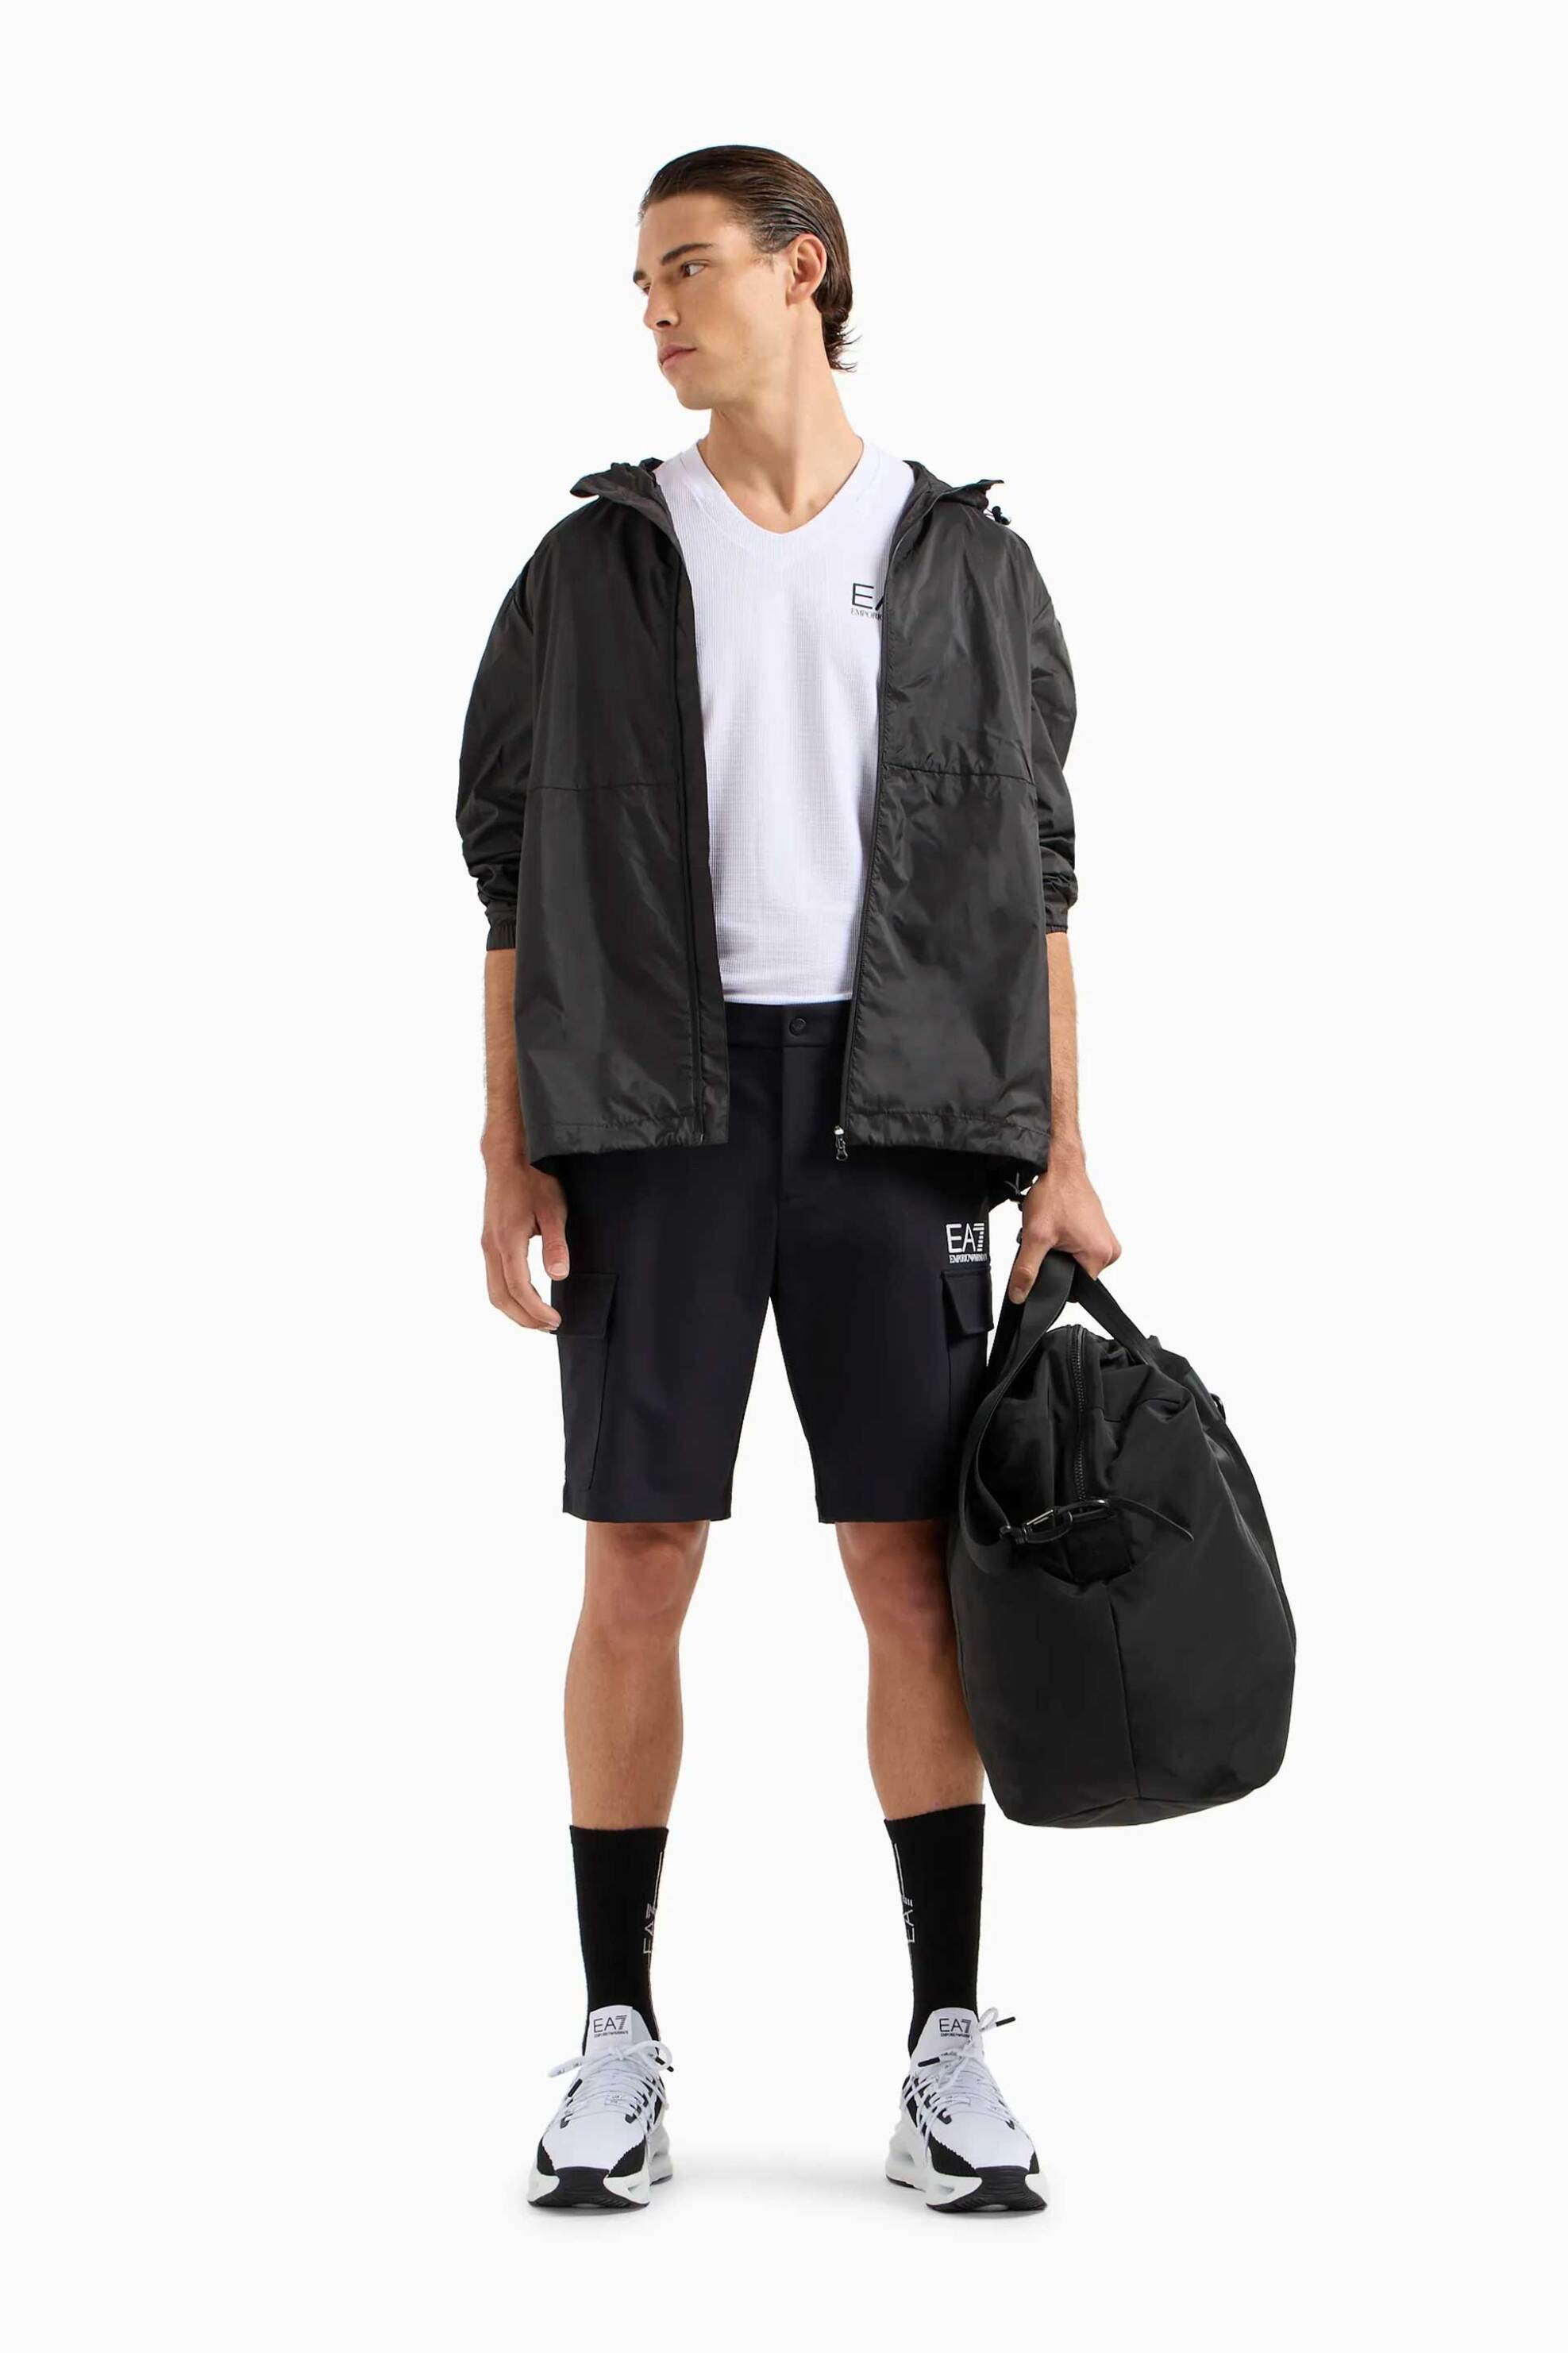 EA7 ανδρικό αδιάβροχο jacket με κουκούλα Oversized Fit - 3DPB01PNFHZ Μαύρο